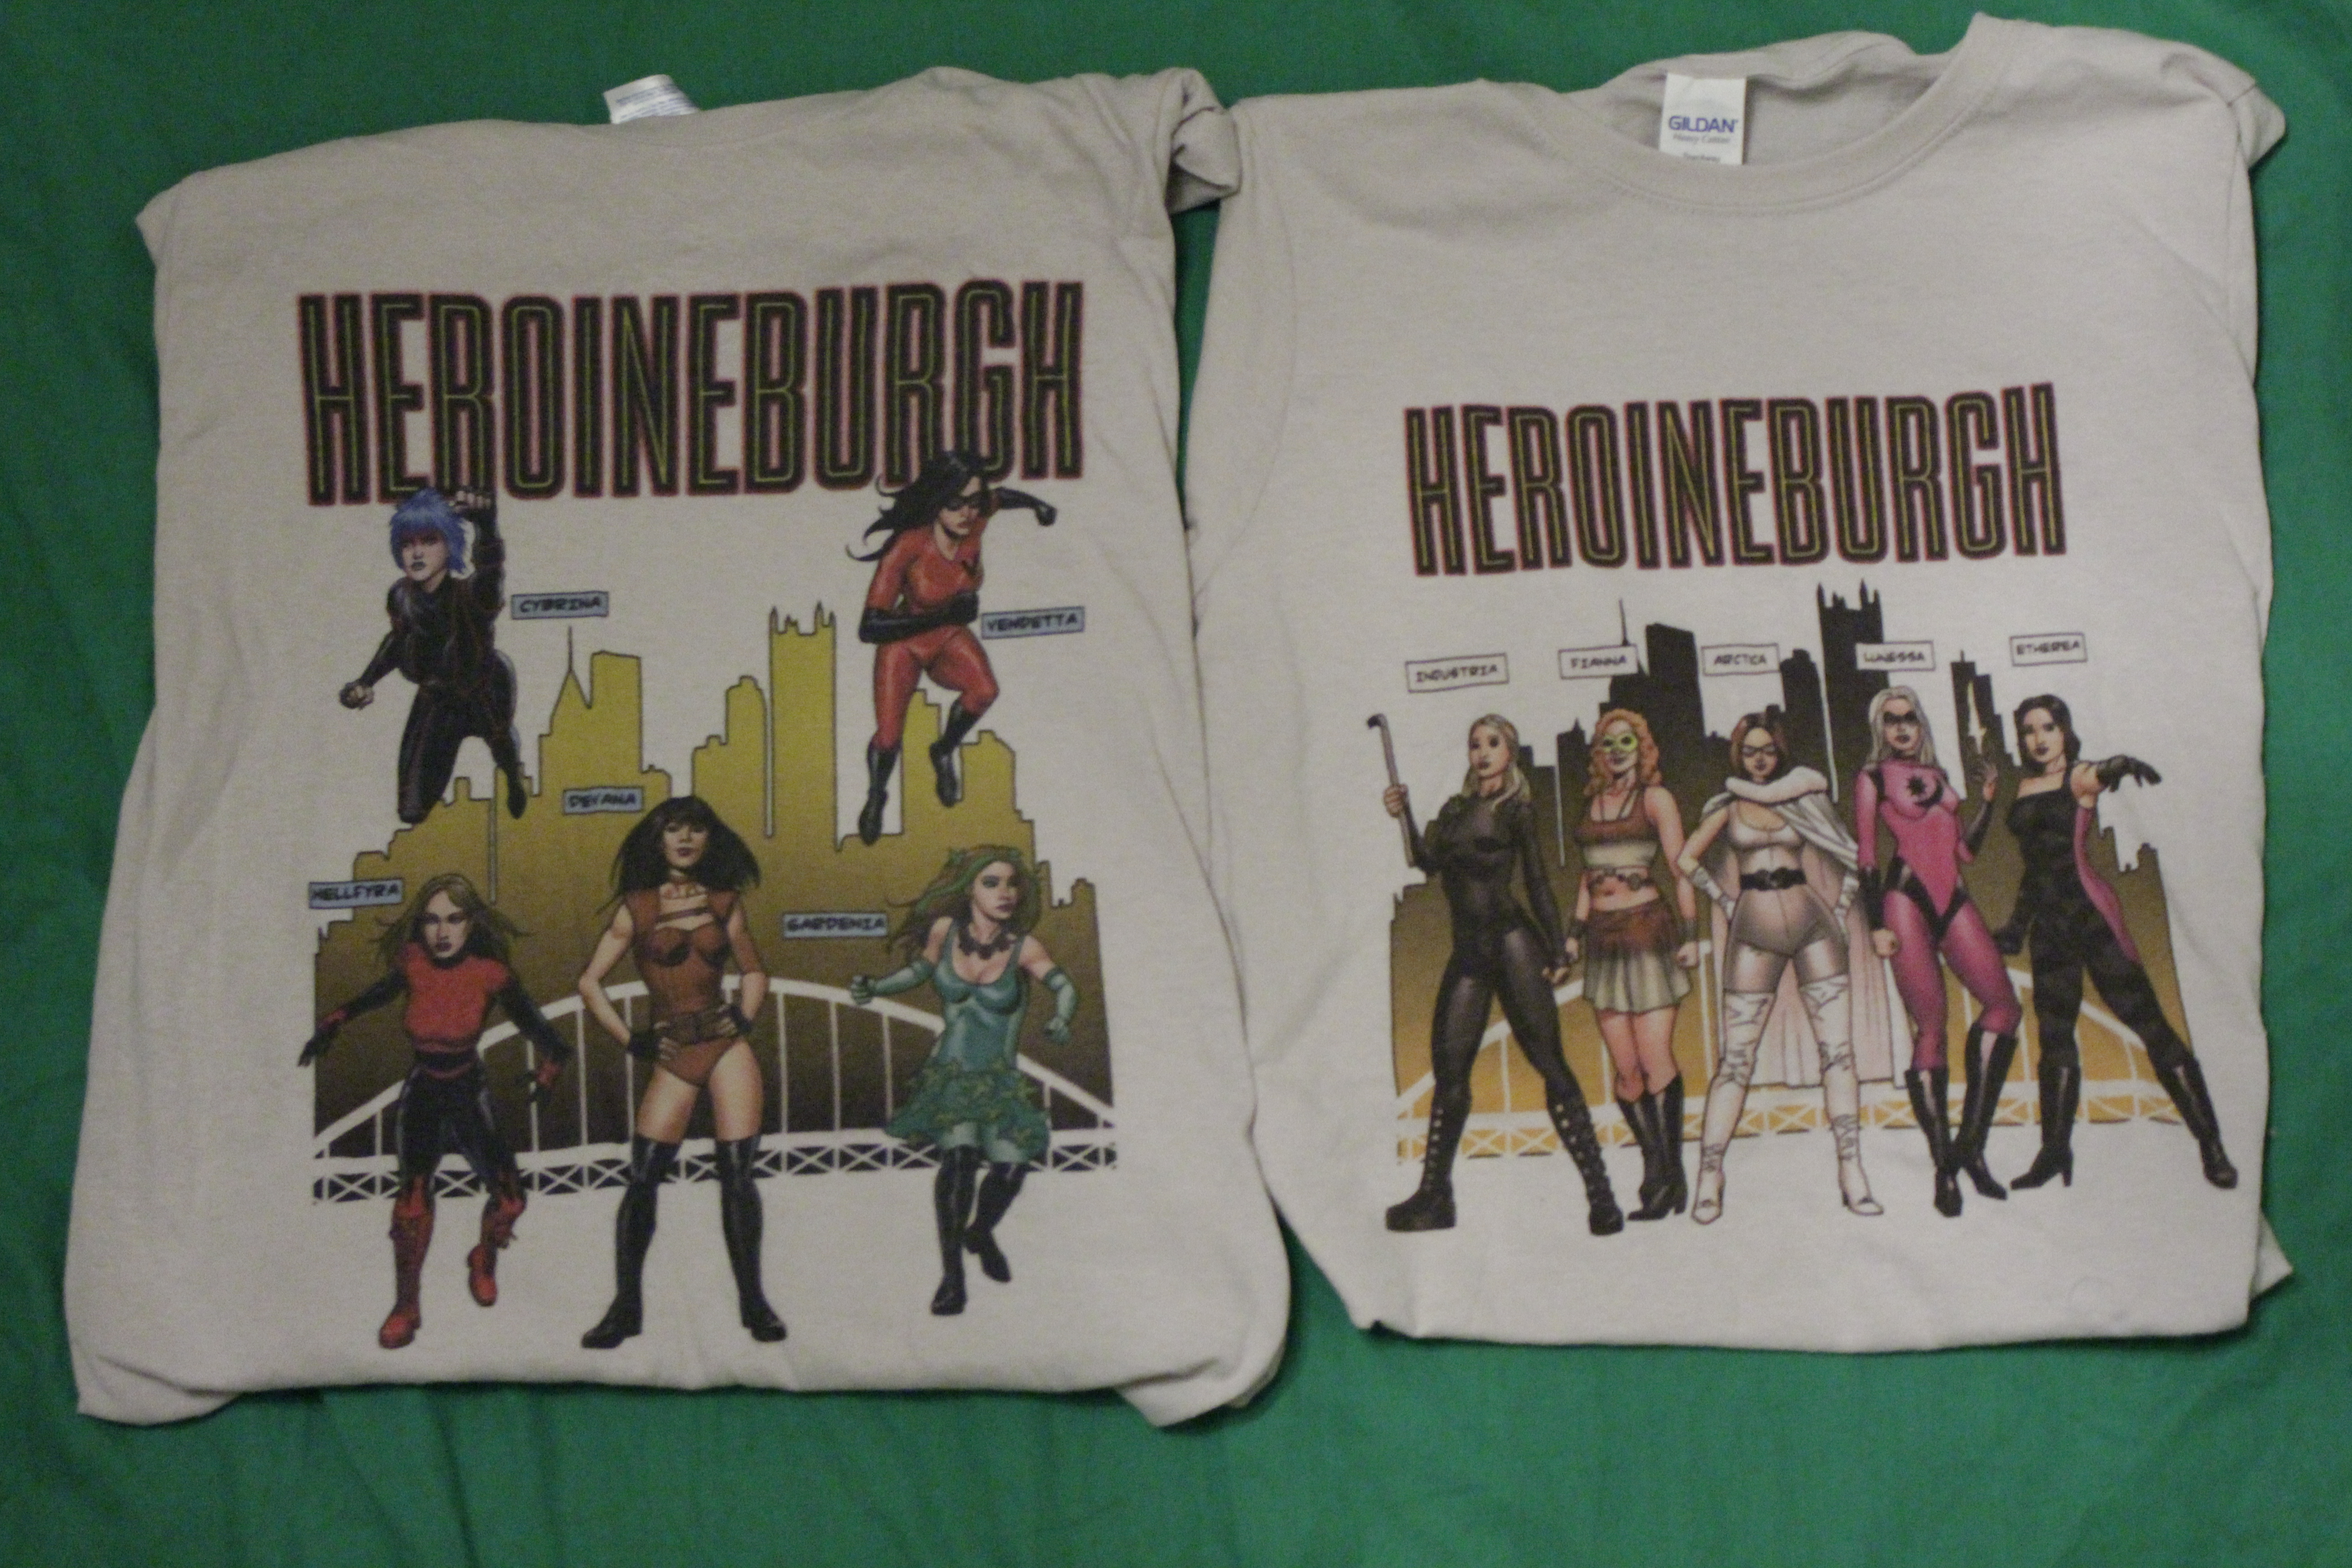 heroineburgh tshirts.JPG